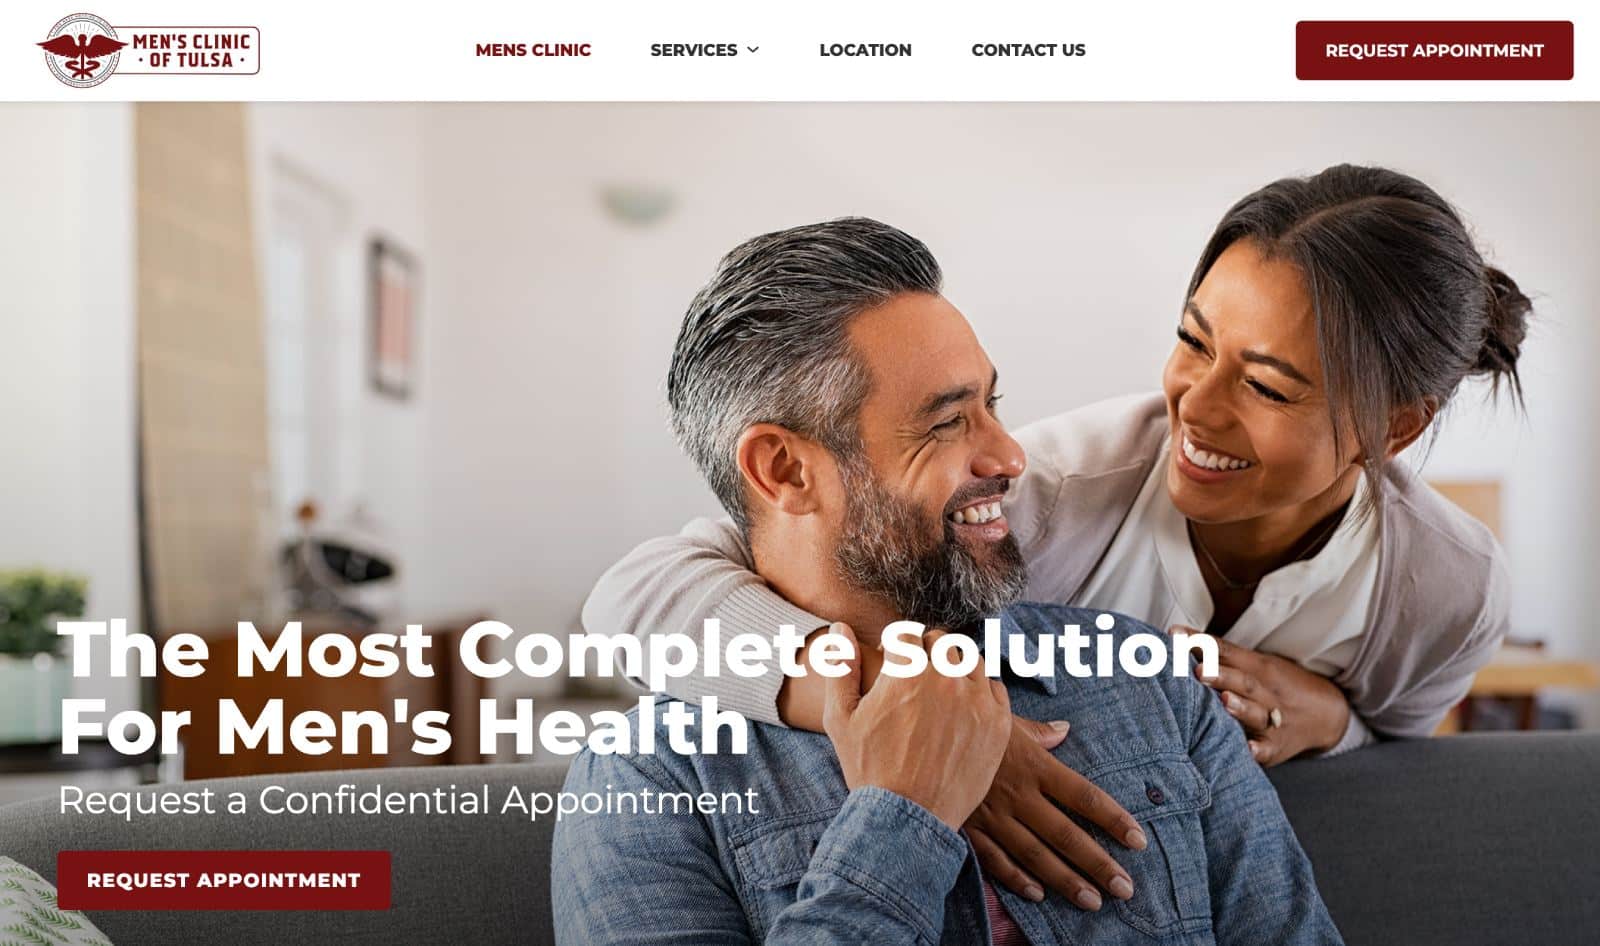 Men's Clinic of Tulsa website design - Men's healthcare website design